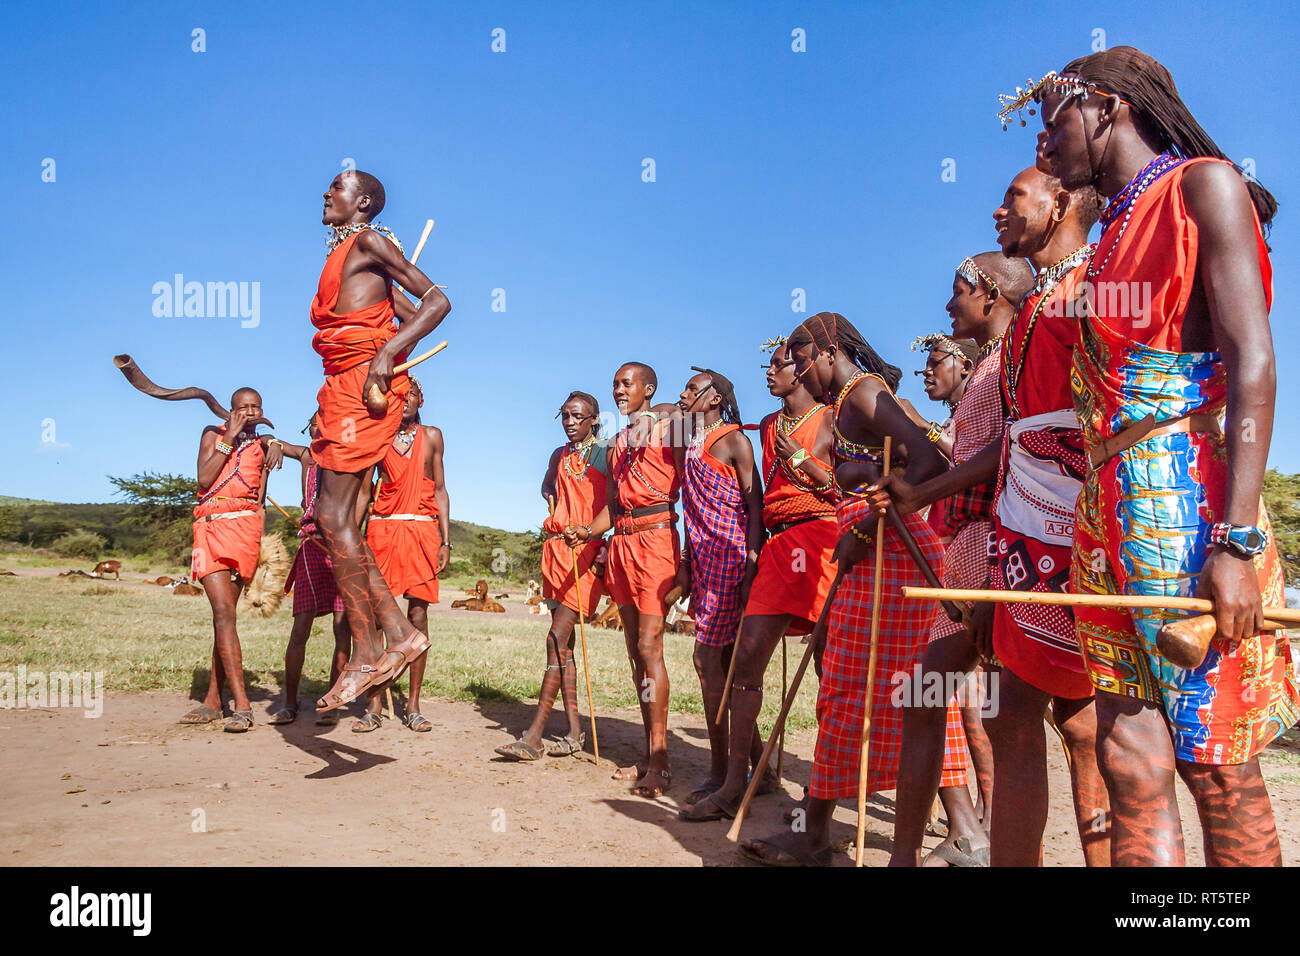 Masai Maasai Warriors Jump Dance Adult Men Jumping Masai Ethnic High Resolution Stock Photography And Images Alamy